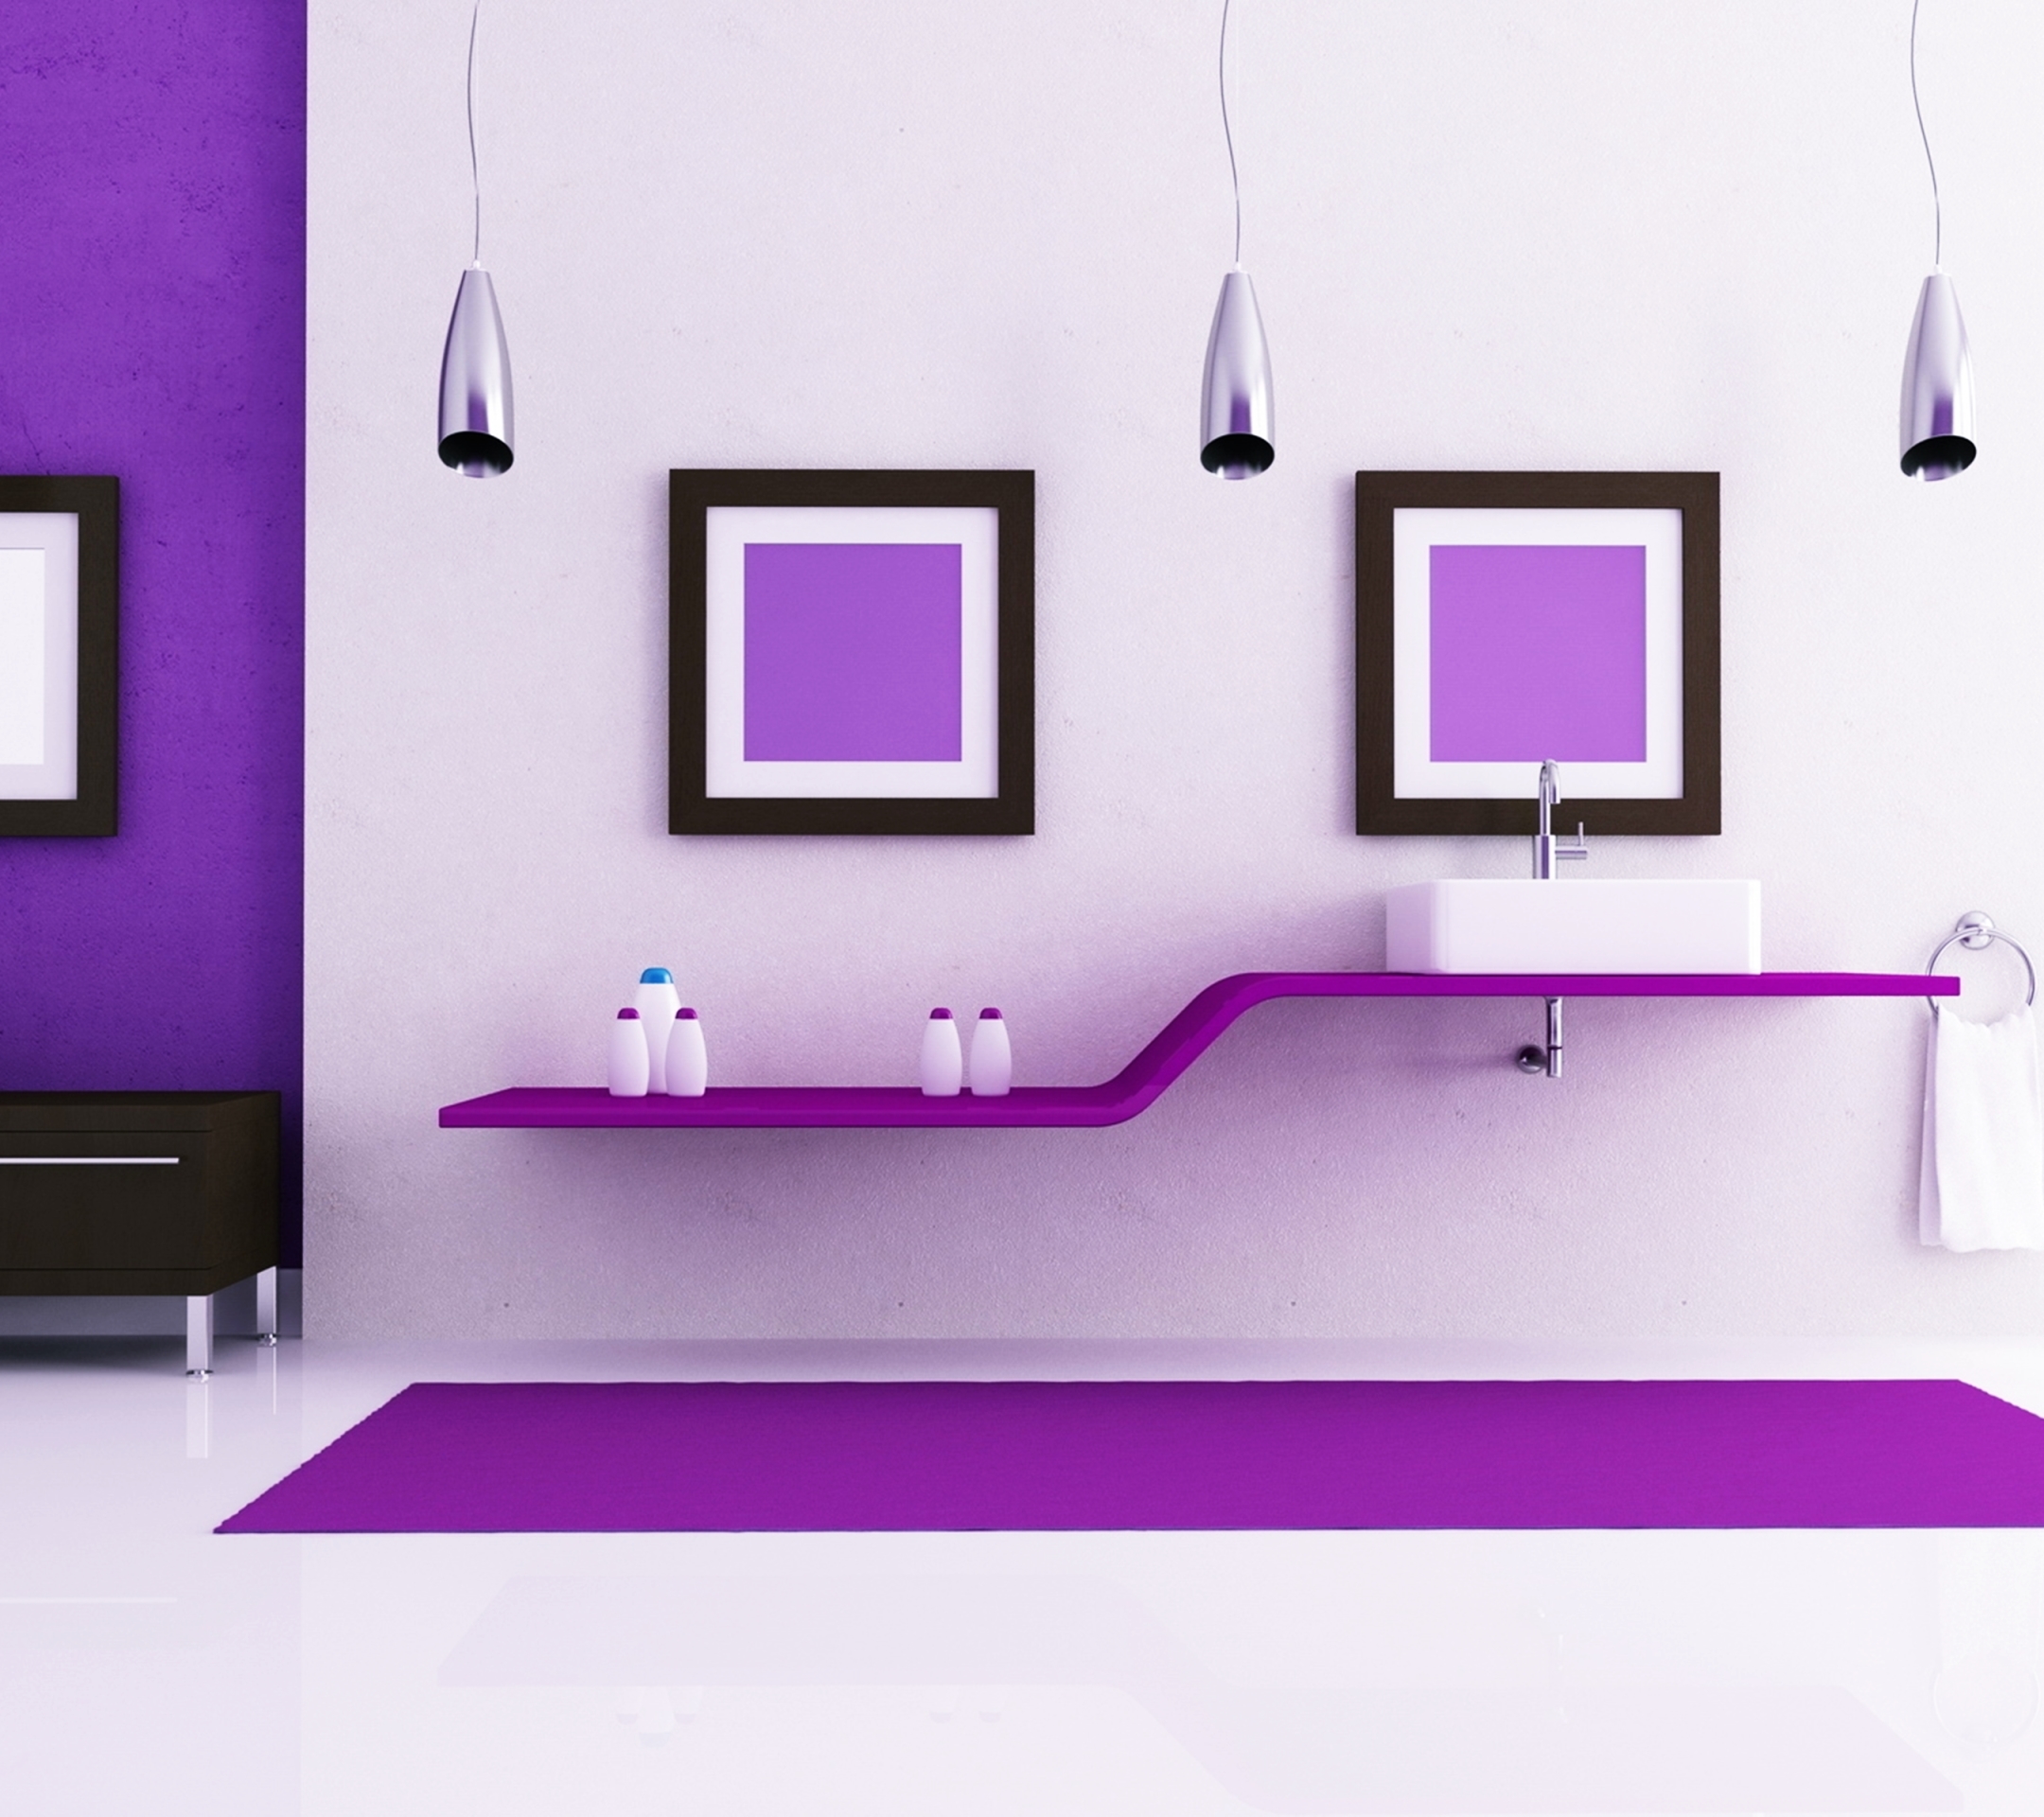 man made, room, interior, purple, bathroom, design